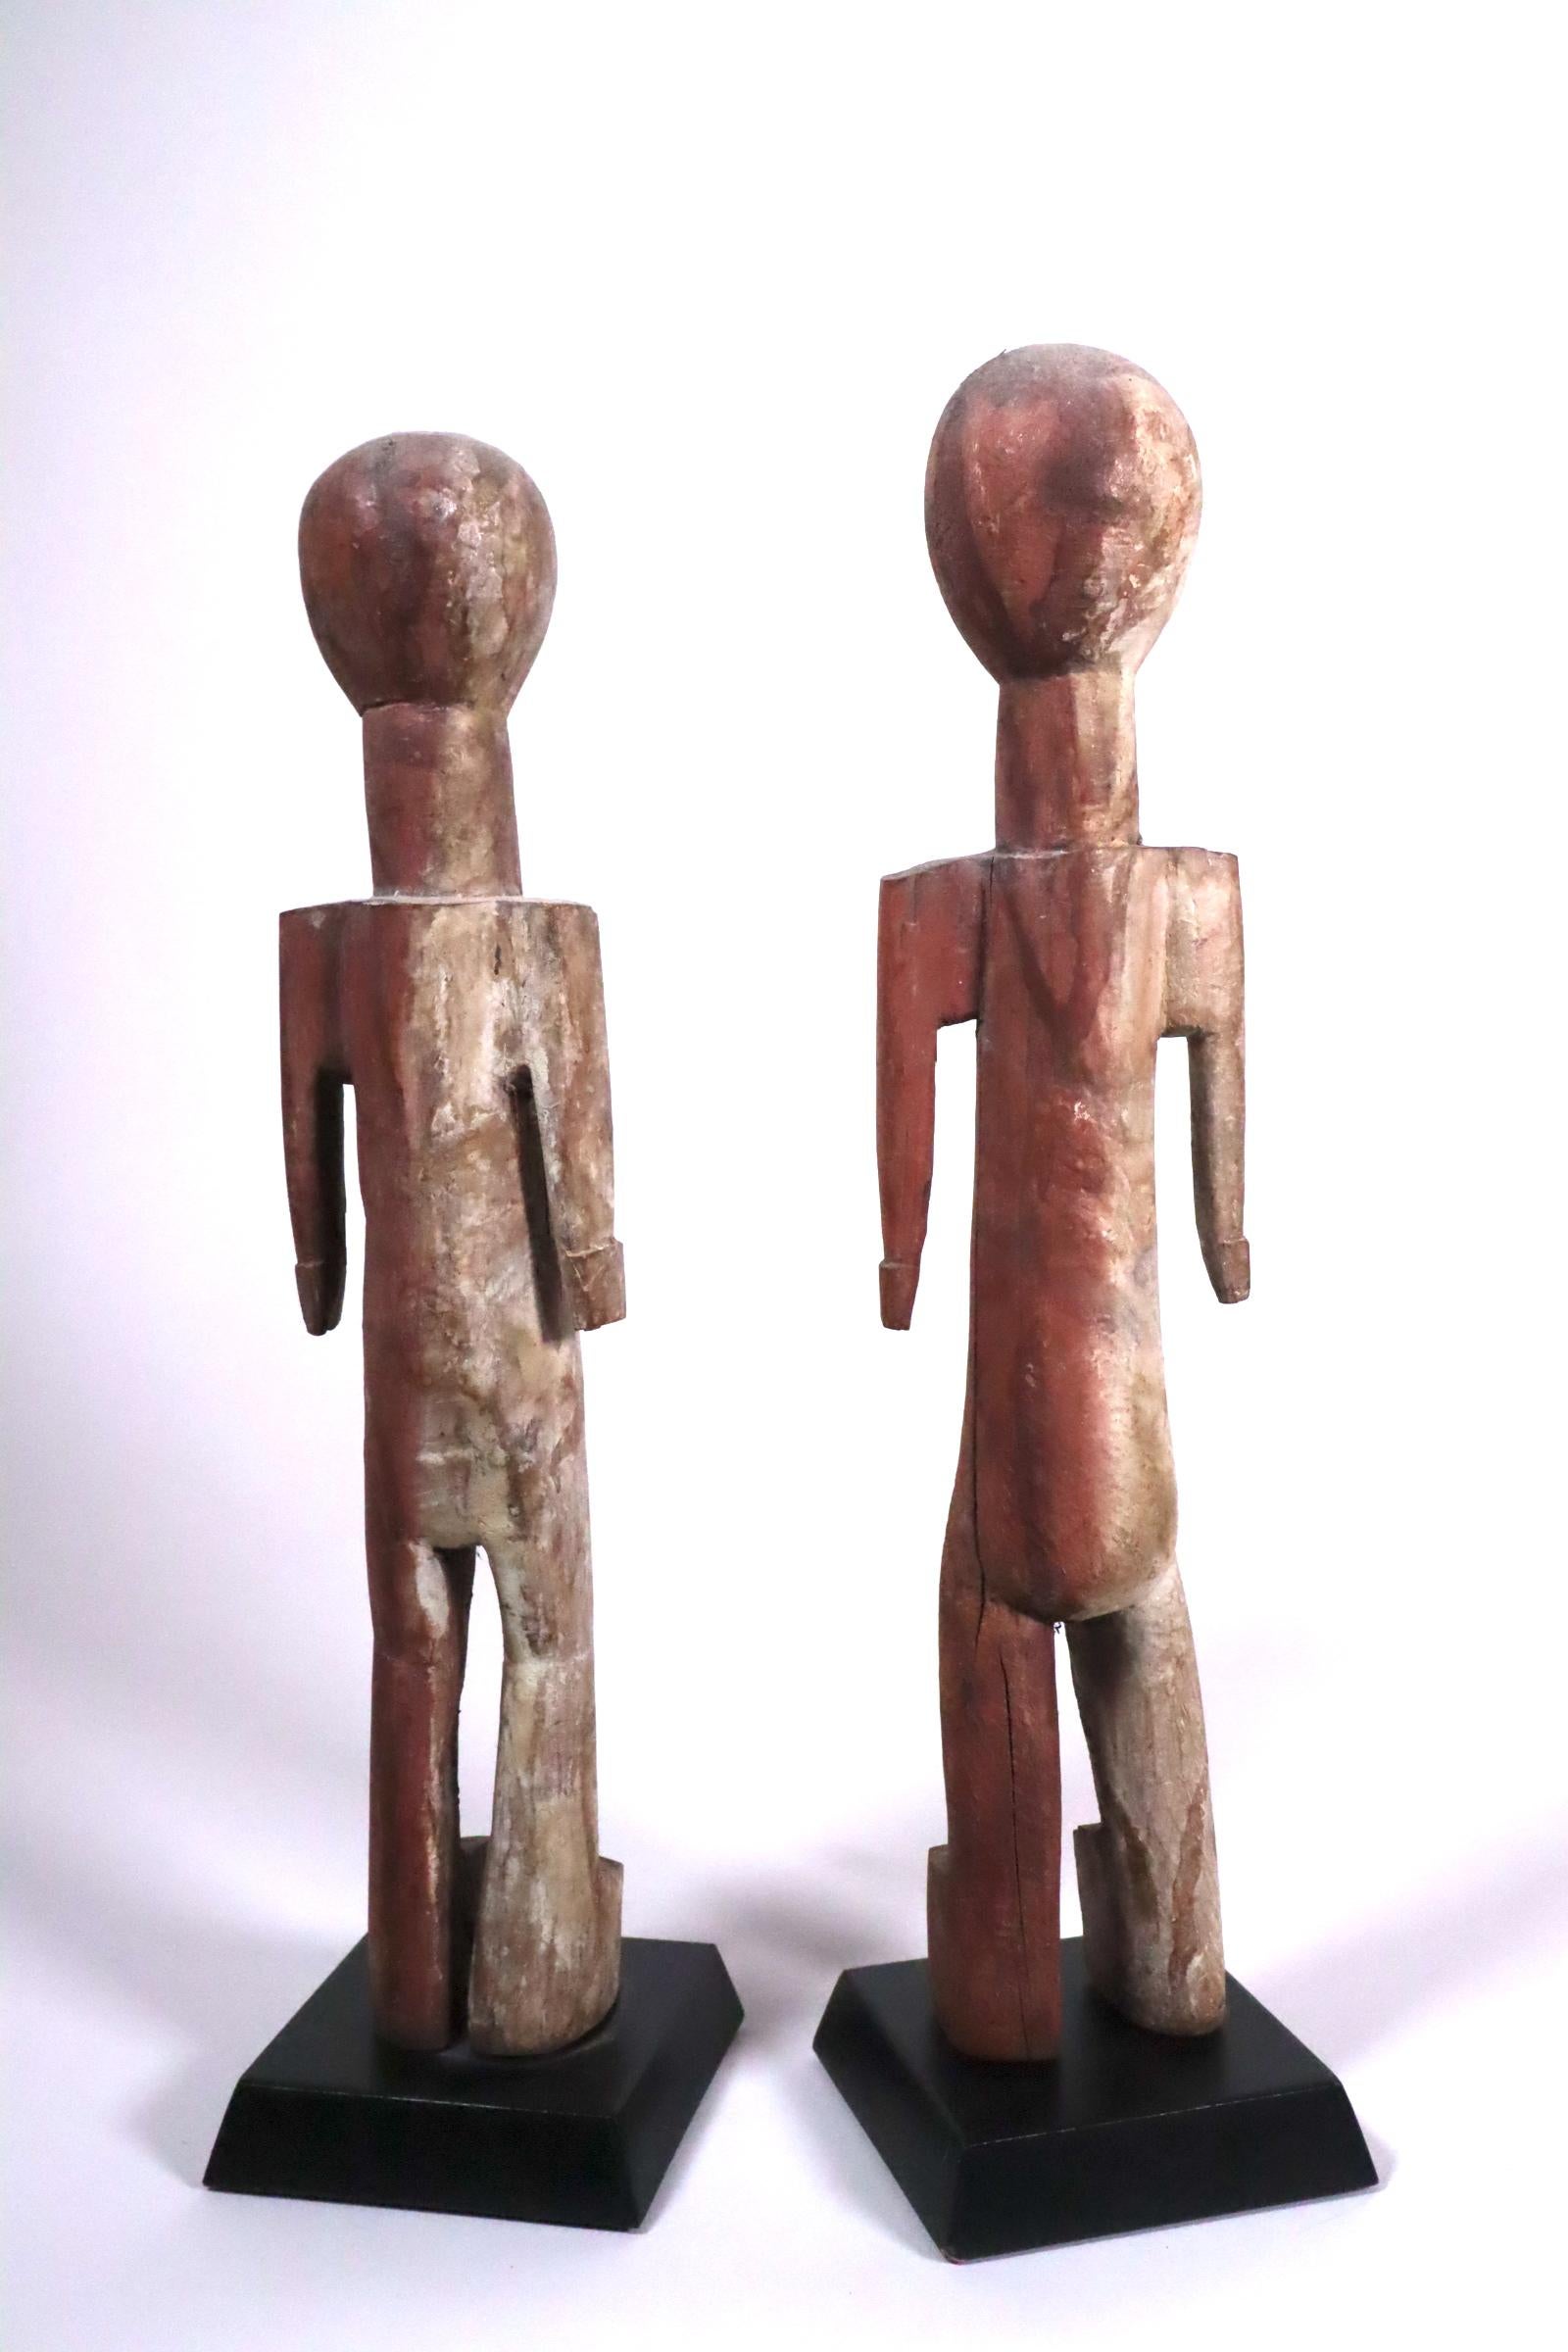 20th Century Pair of Adan Figures Togo Ghana Minimal Cubist Expressionist African Tribal Art